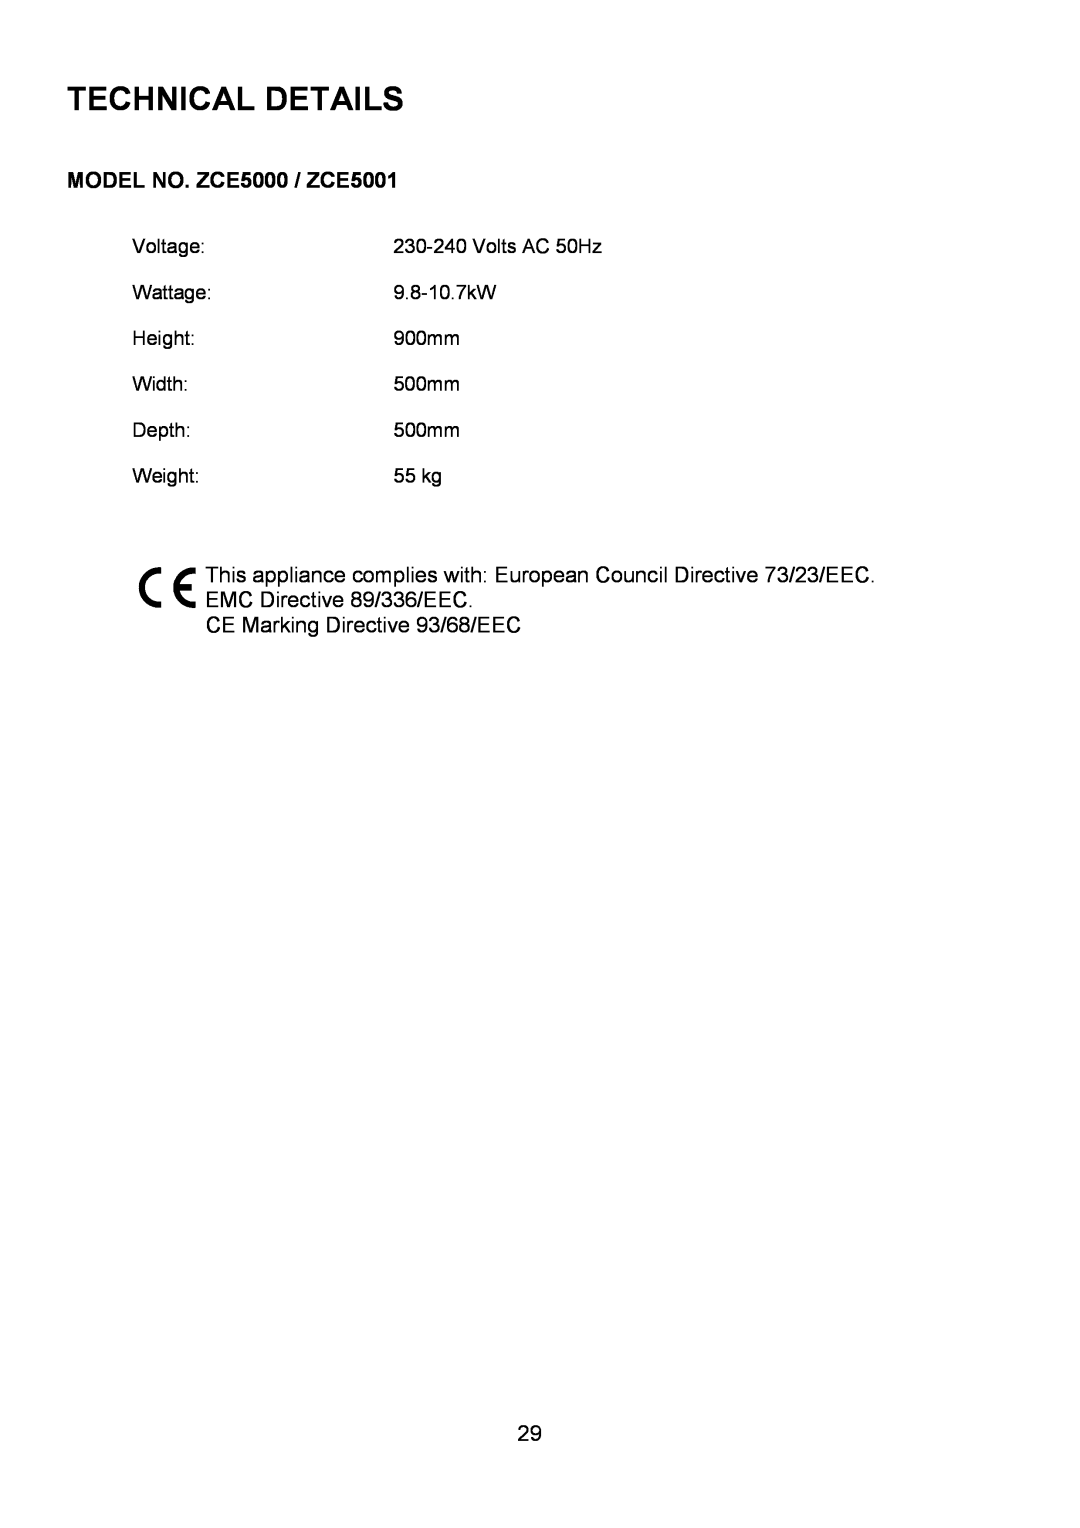 Zanussi ZCE 5000 Technical Details, MODEL NO. ZCE5000 / ZCE5001, CE Marking Directive 93/68/EEC, Voltage, Volts AC 50Hz 